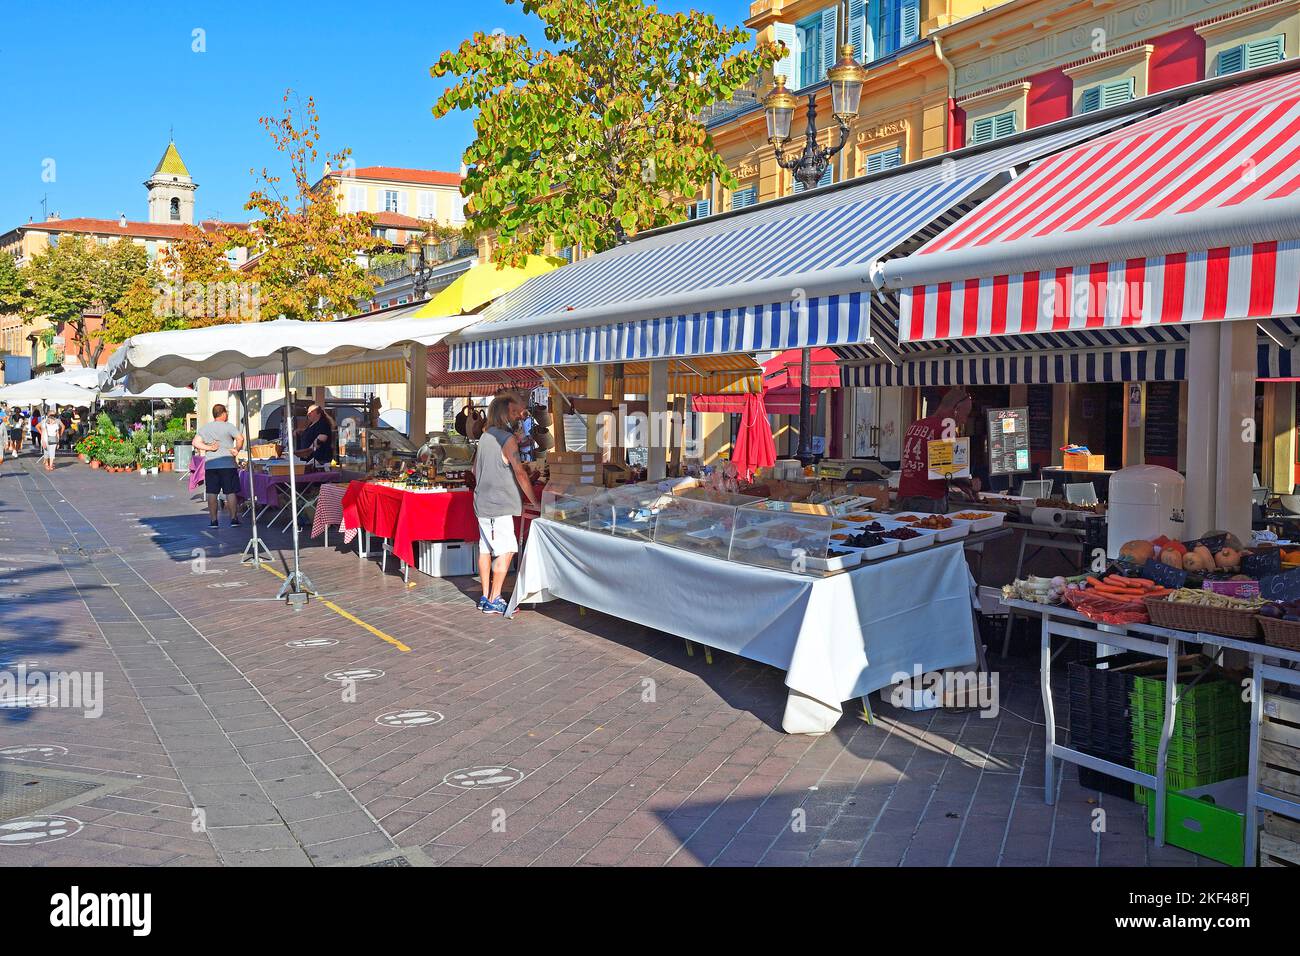 Markt auf dem Cours Saleya, Innenstadt, Nizza, Département Alpes-Maritimes, Regione Provence-Alpes-Côte d’Azur, Frankreich Foto Stock